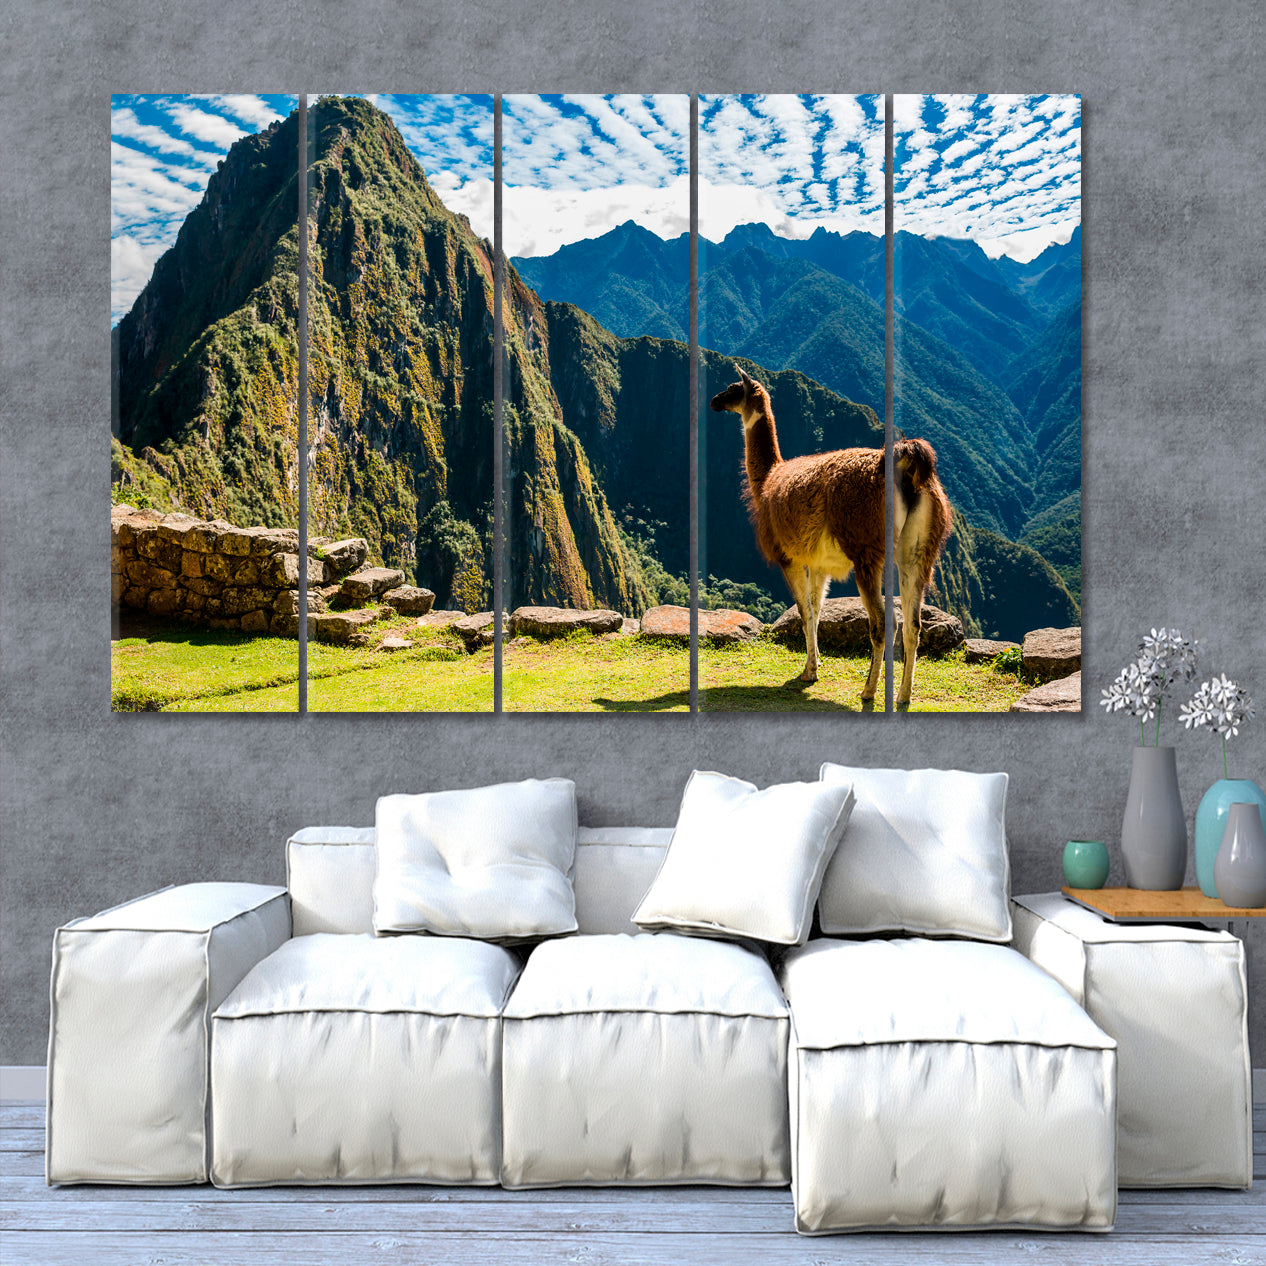 Seven World Wonders Machu Picchu Peru Mountain Ridge Lama Famous Landmarks Artwork Print Artesty 5 panels 36" x 24" 